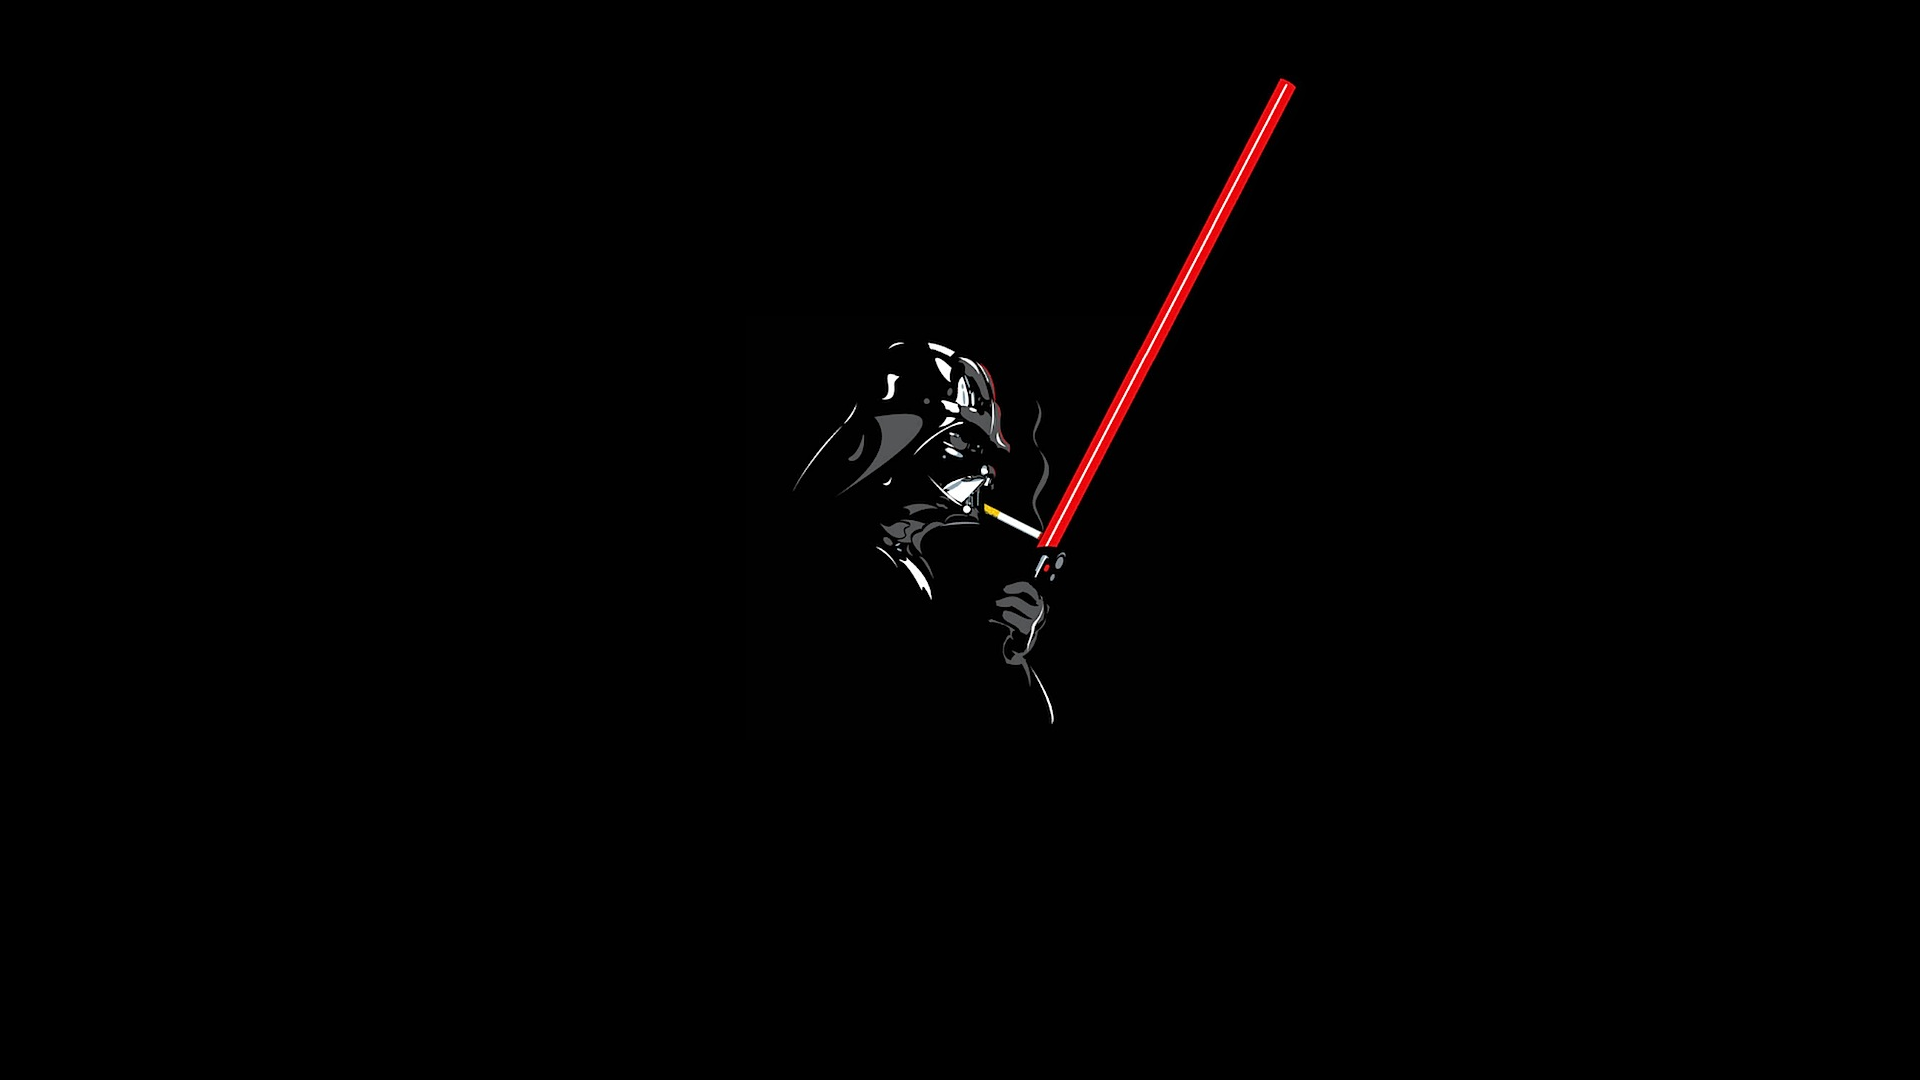 Darth Vader lighting a cigarette off his lightsaber [Wallpaper]